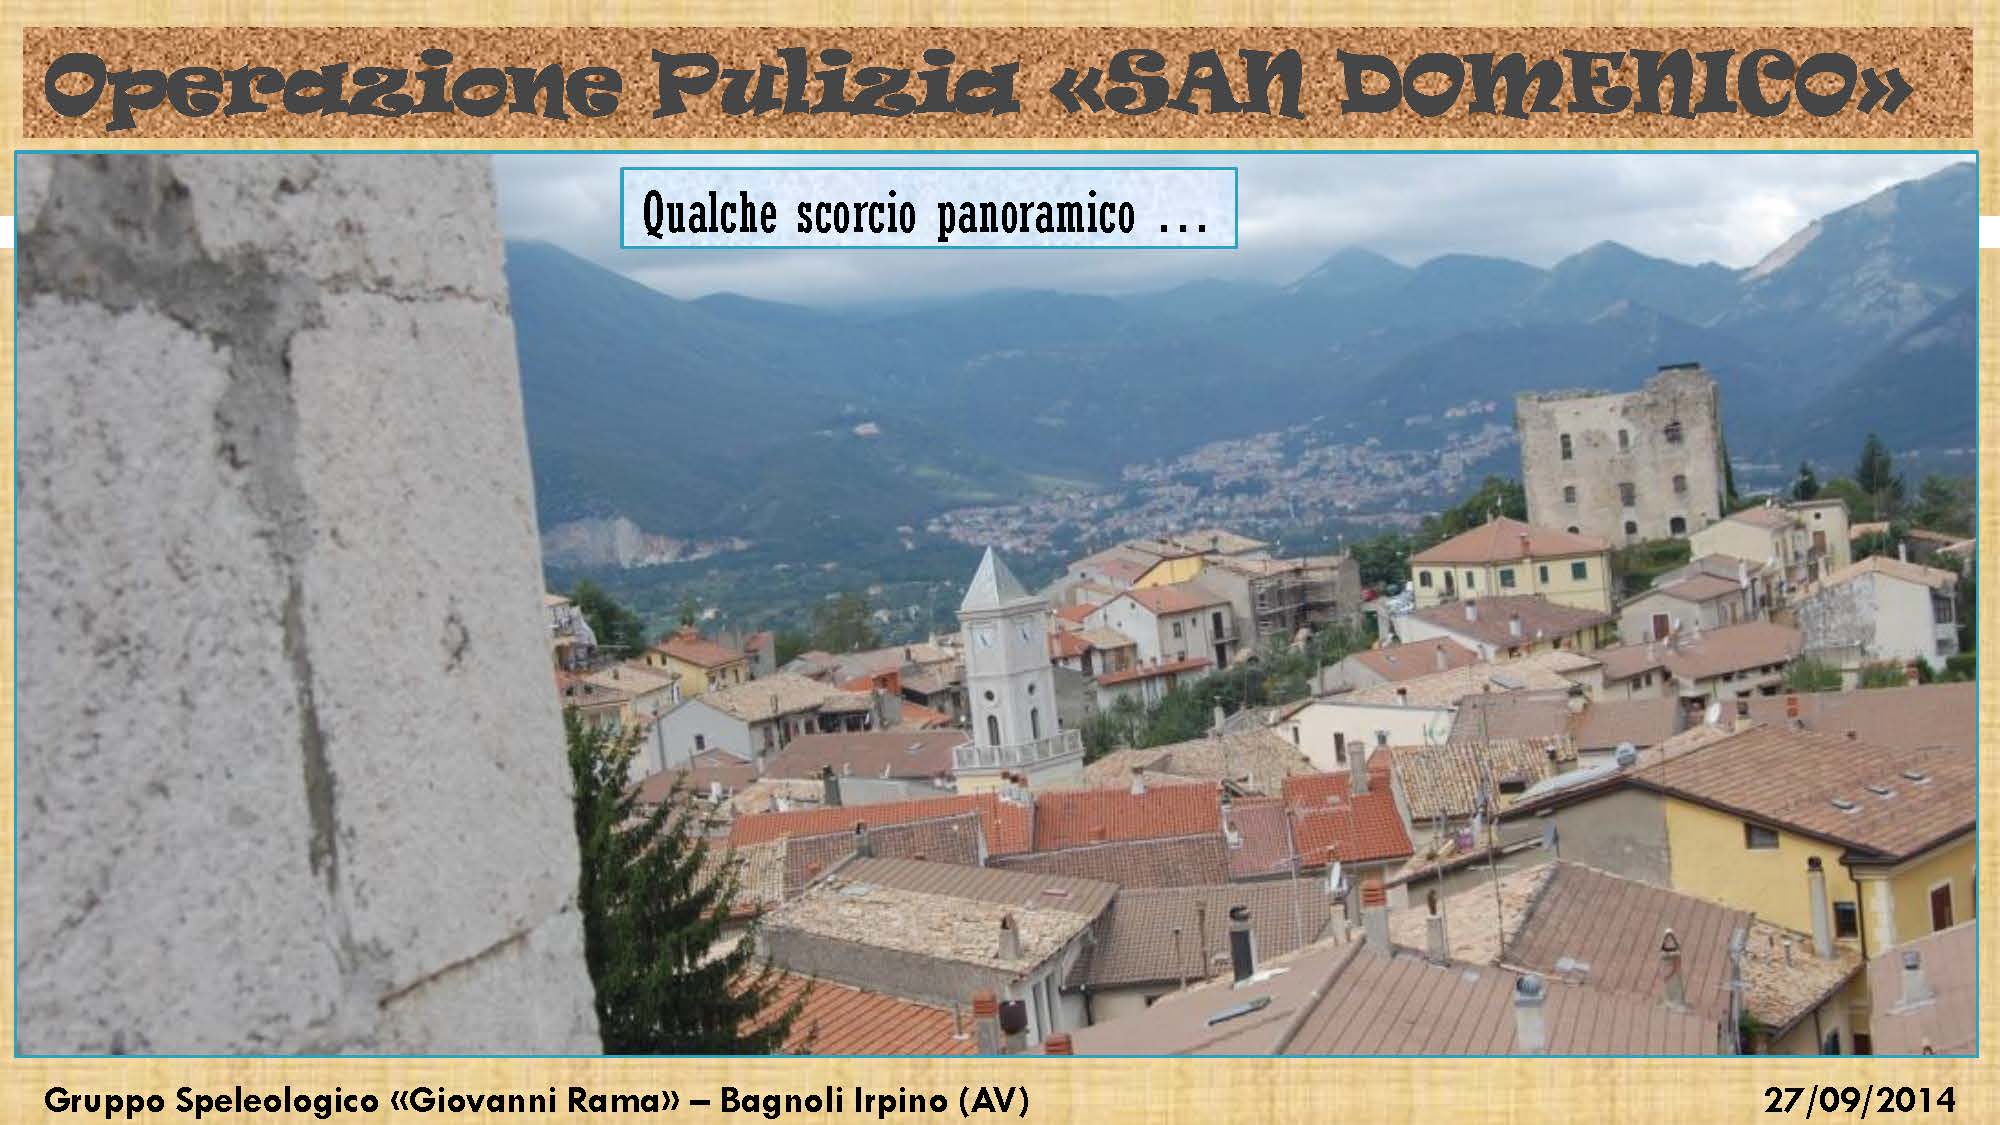 Bagnoli-Pulizia-San-Domenico-2014_Pagina_26